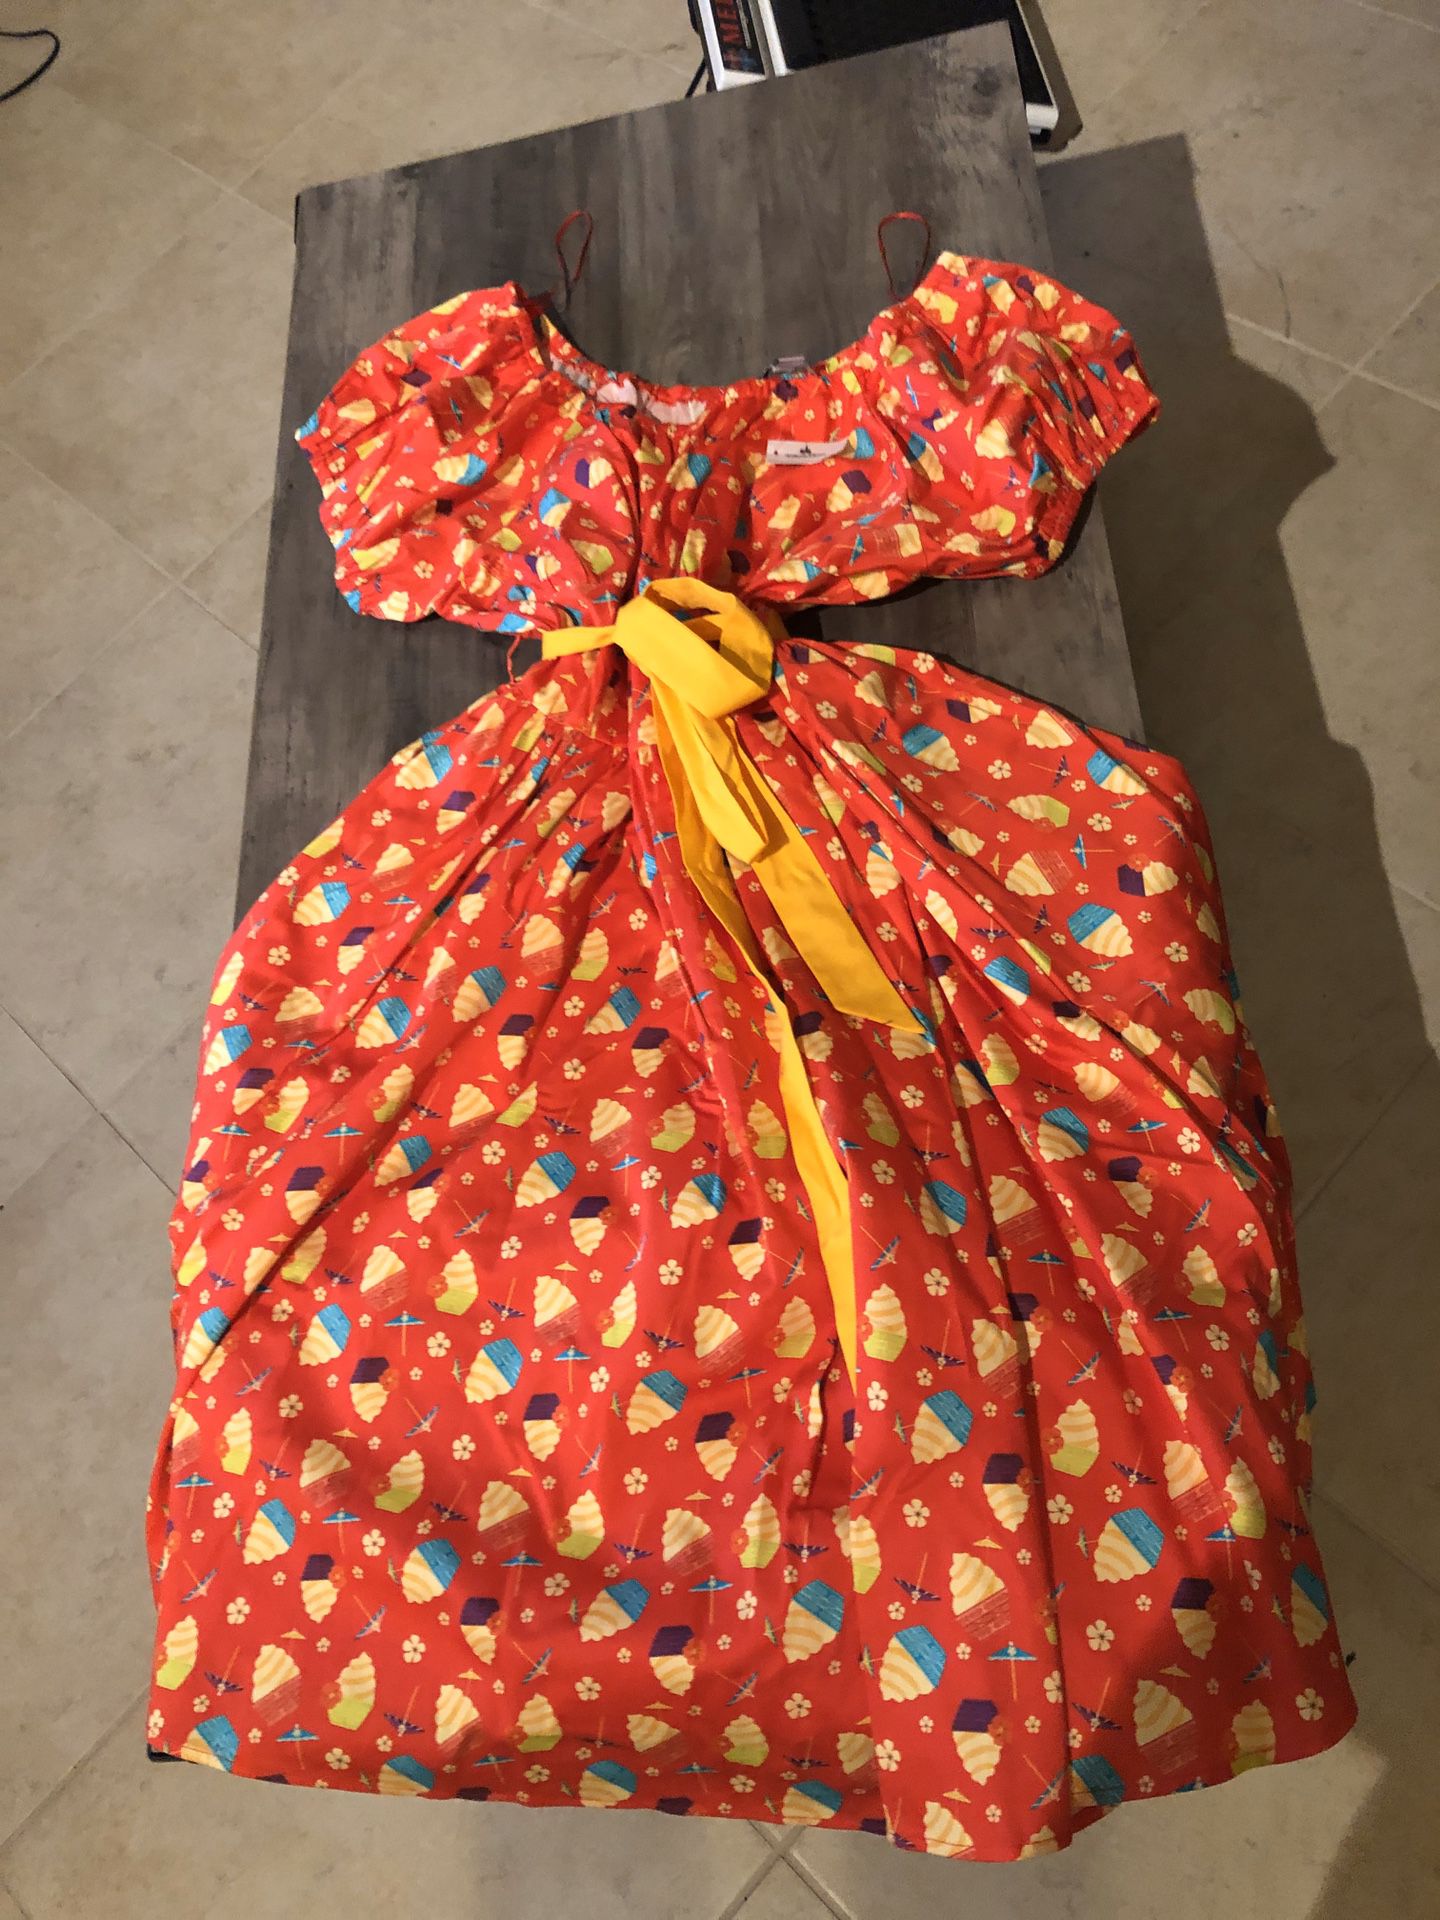 Disney Dress Shop Dole Whip Pineapple Dress size 1X XL Never Worn Brand New